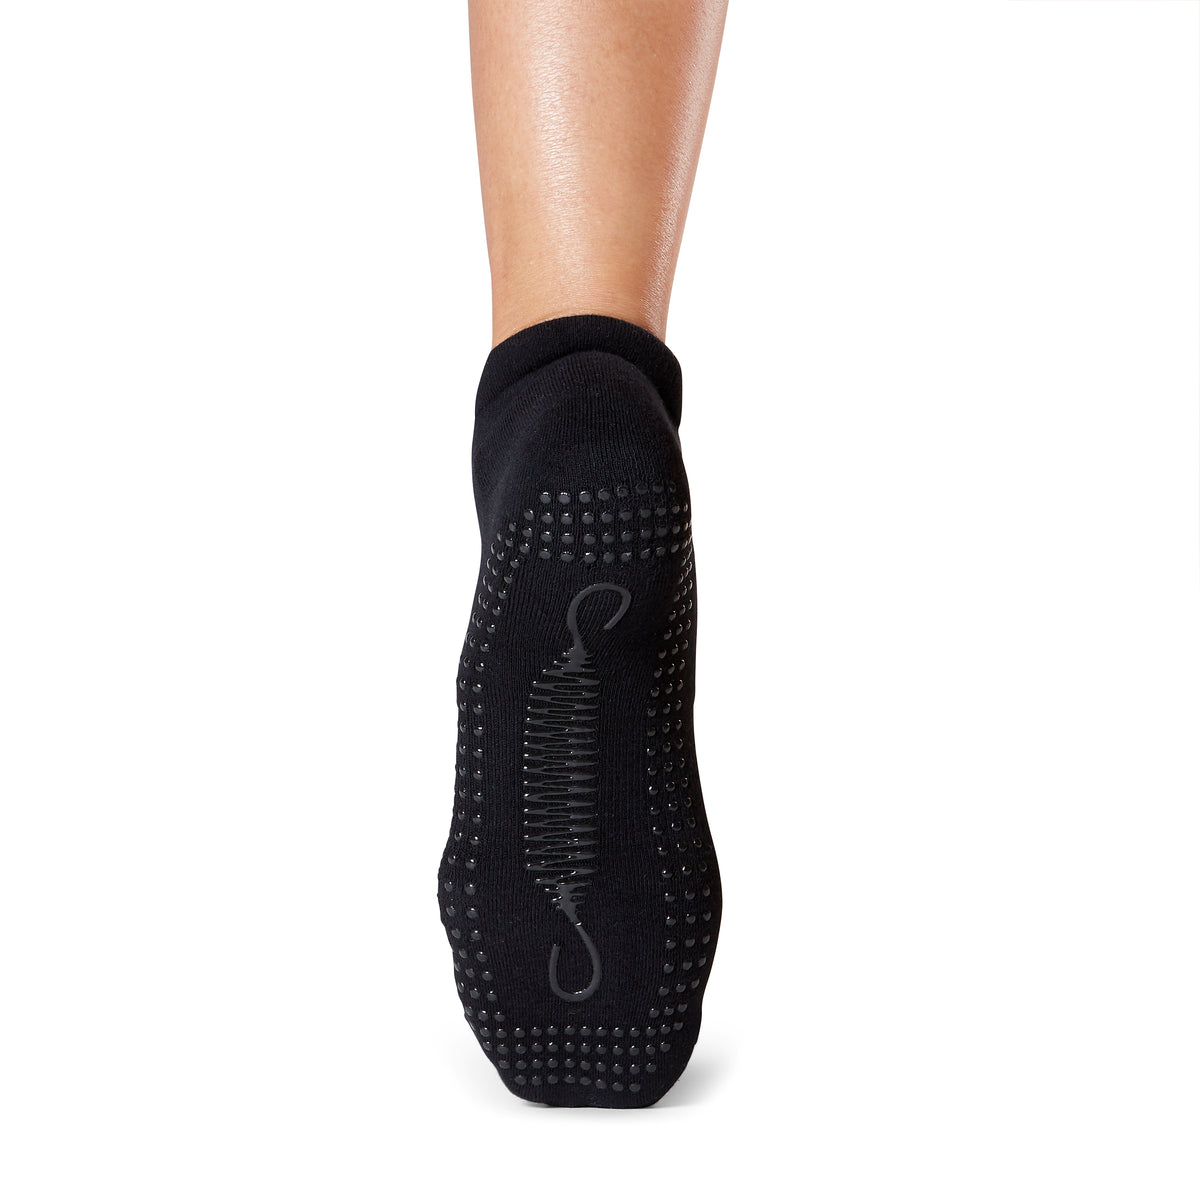 Aqua SLT Tavi Grip Sock – Strengthen Lengthen Tone